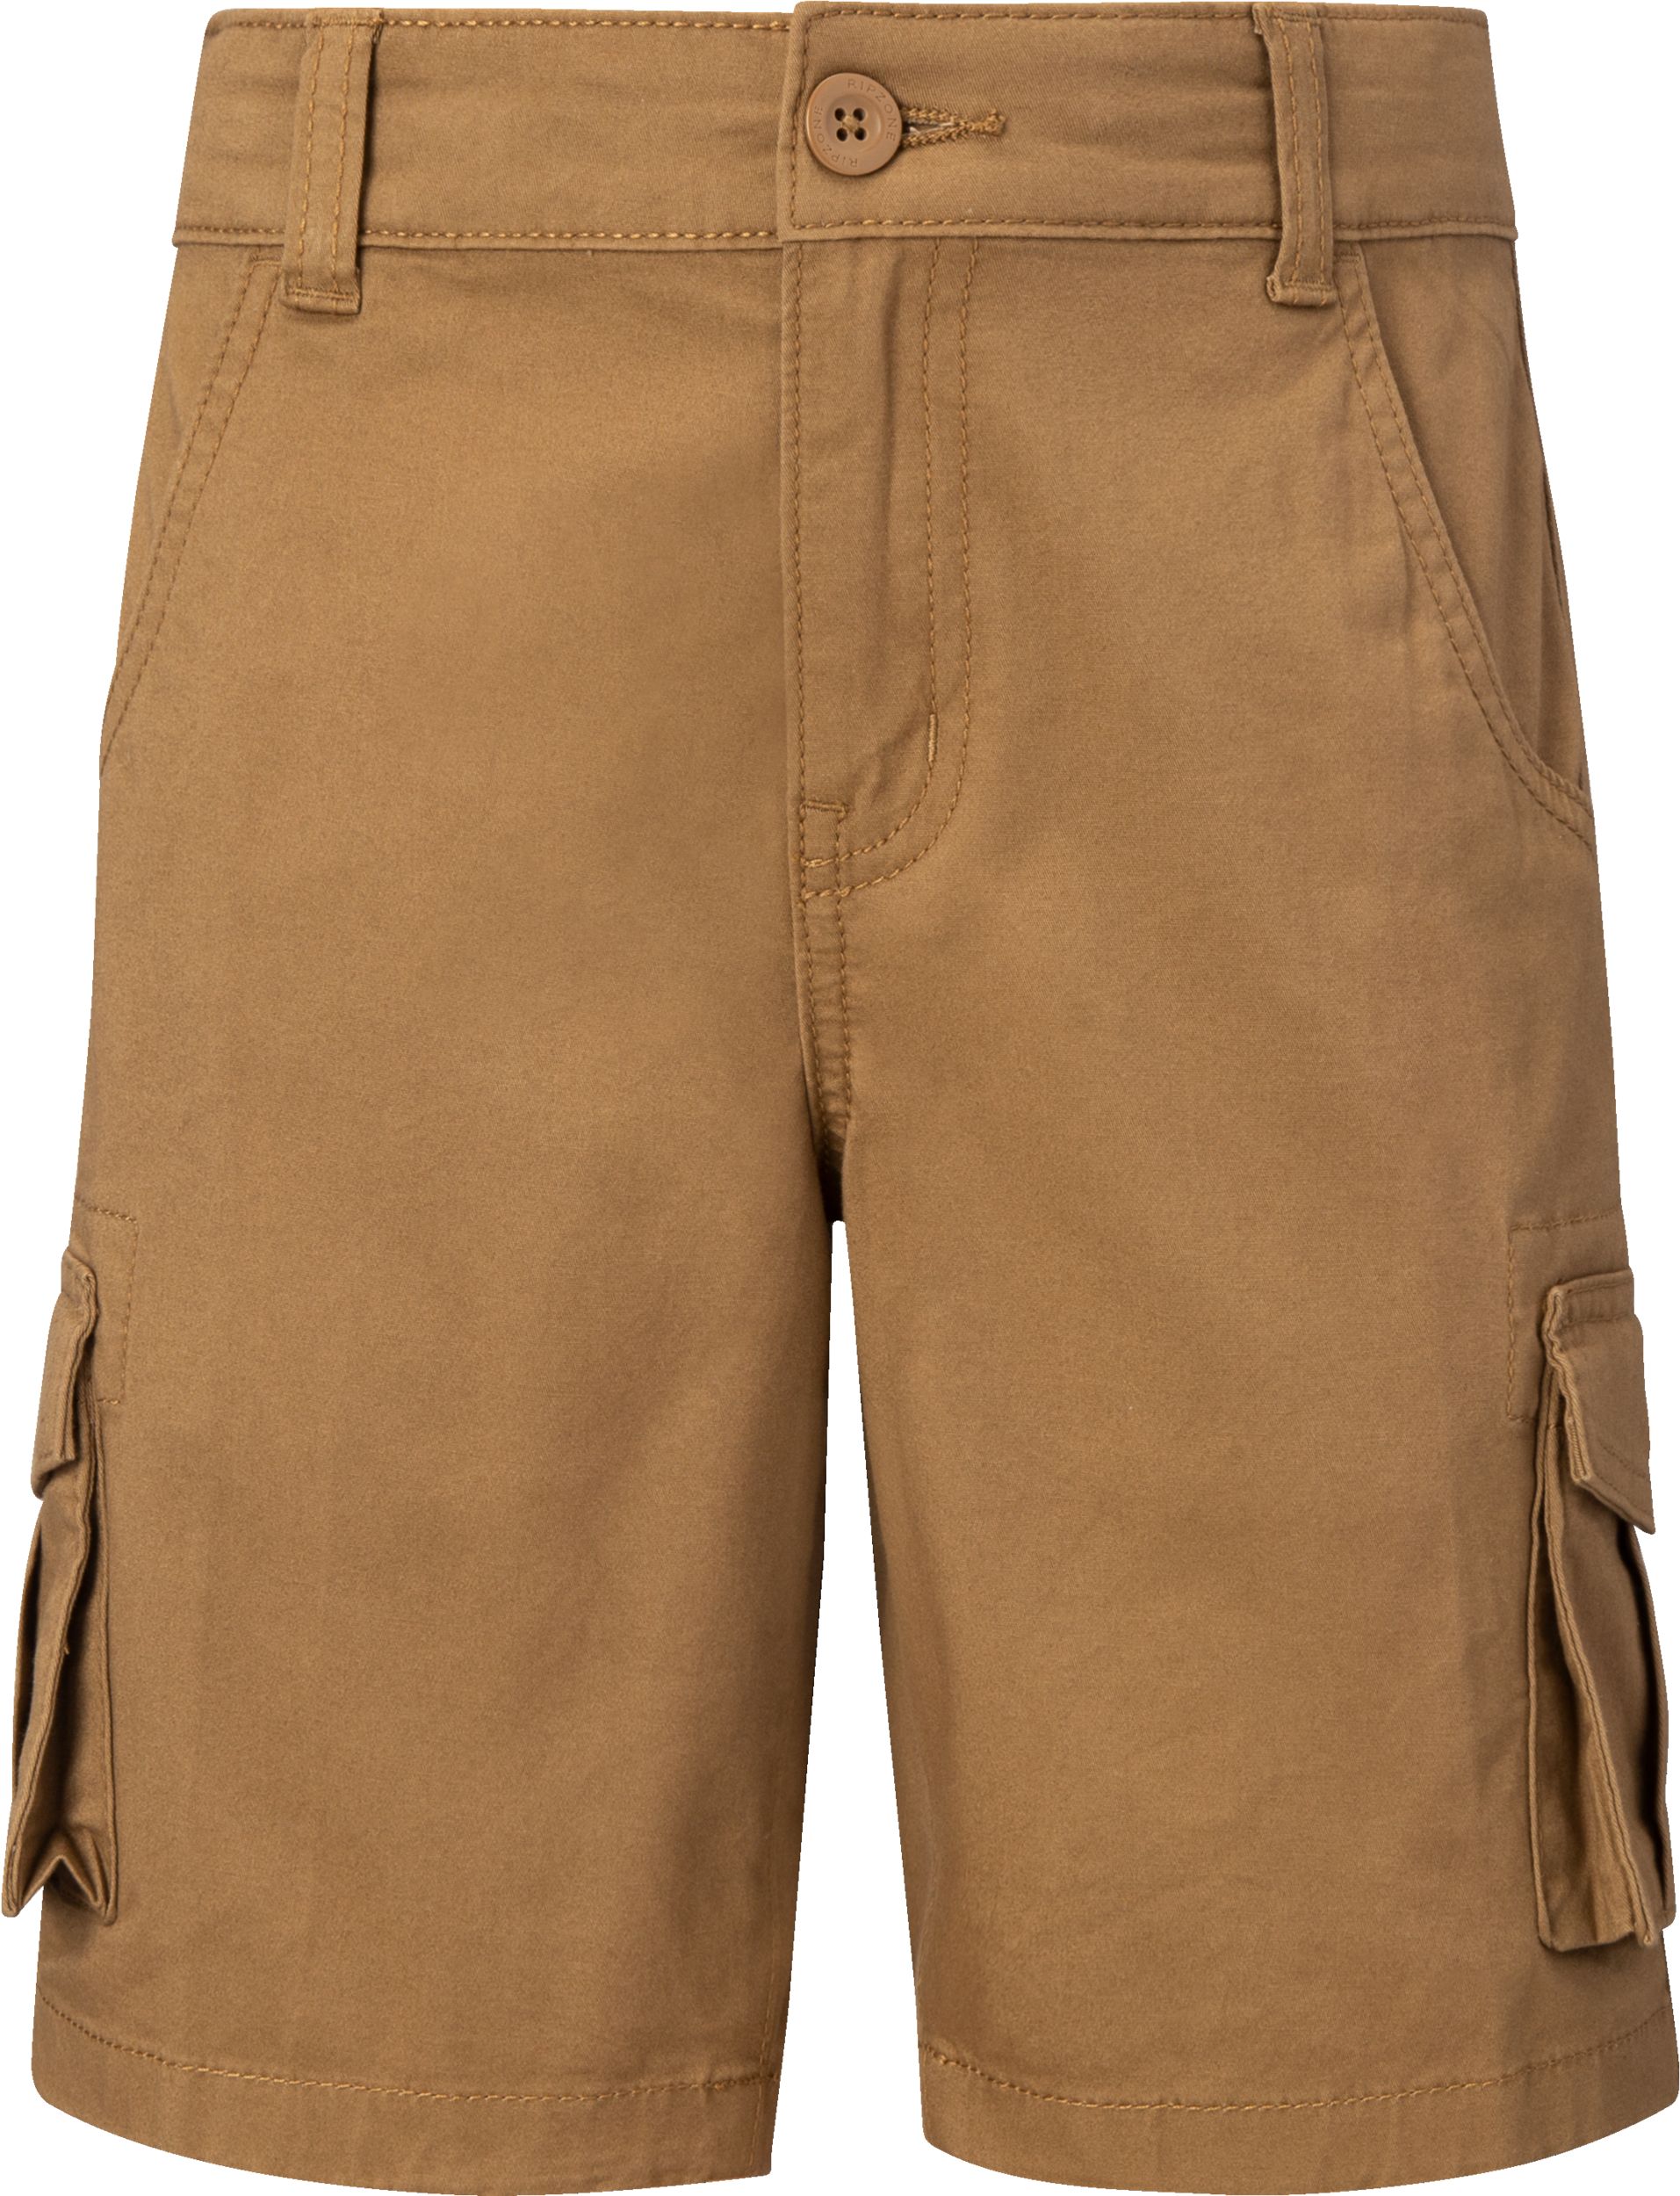 Sonoma - Boys Cargo Style Pants